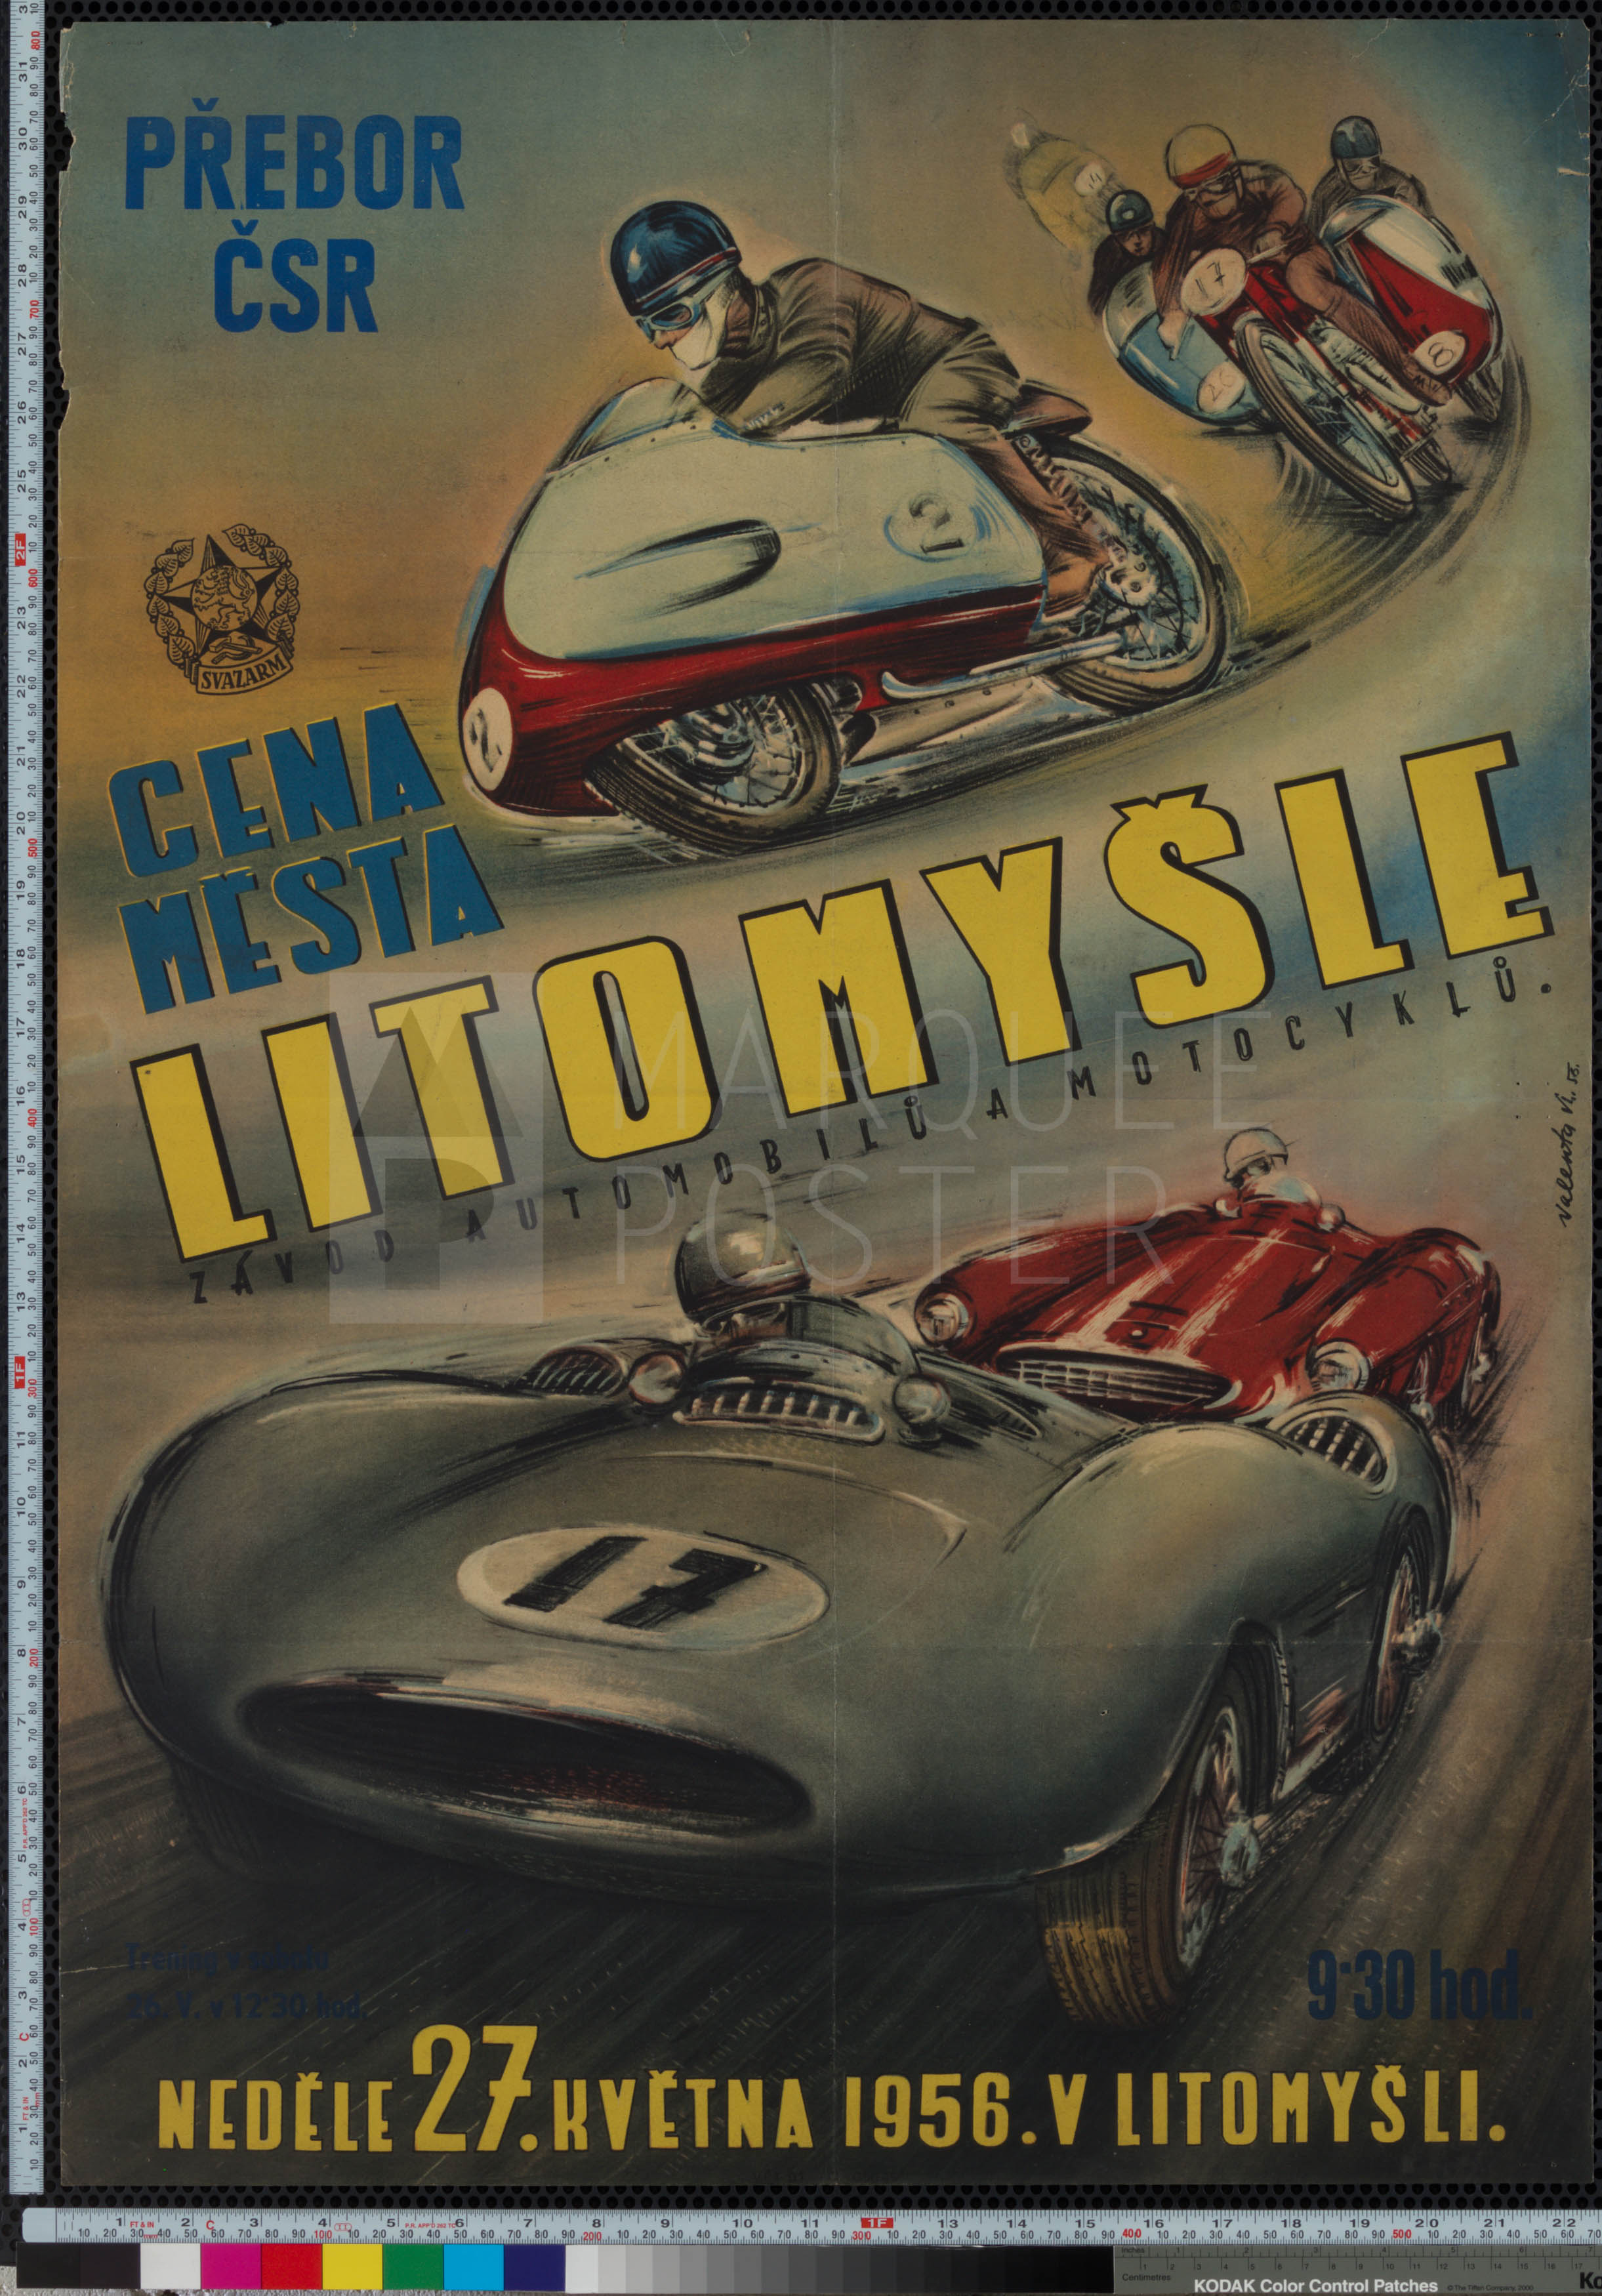 49-championship-czechoslovakia-litomysl-race-cars-and-motorcycles-czech-a1-1956-02